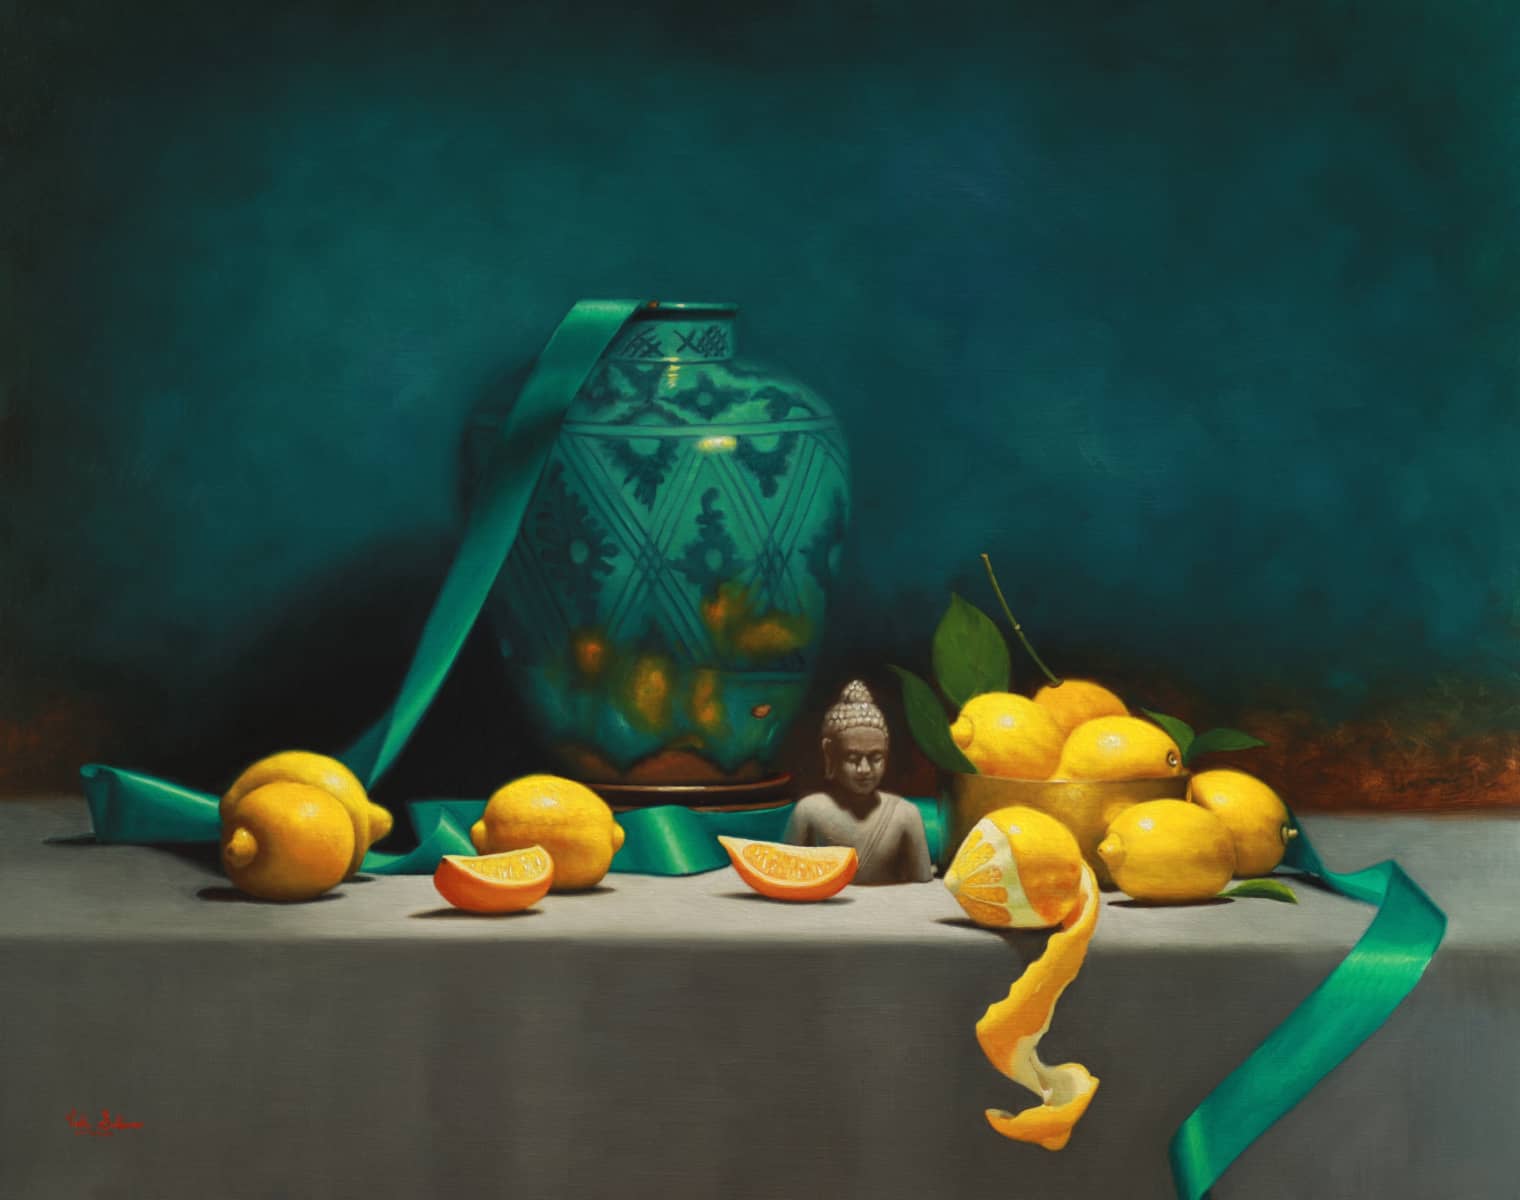 Vicki Sullivan Painting ~ 'Persian Vase with Lemons and Buddha' - Curate Art & Design Gallery Sorrento, Mornington Peninsula, Melbourne